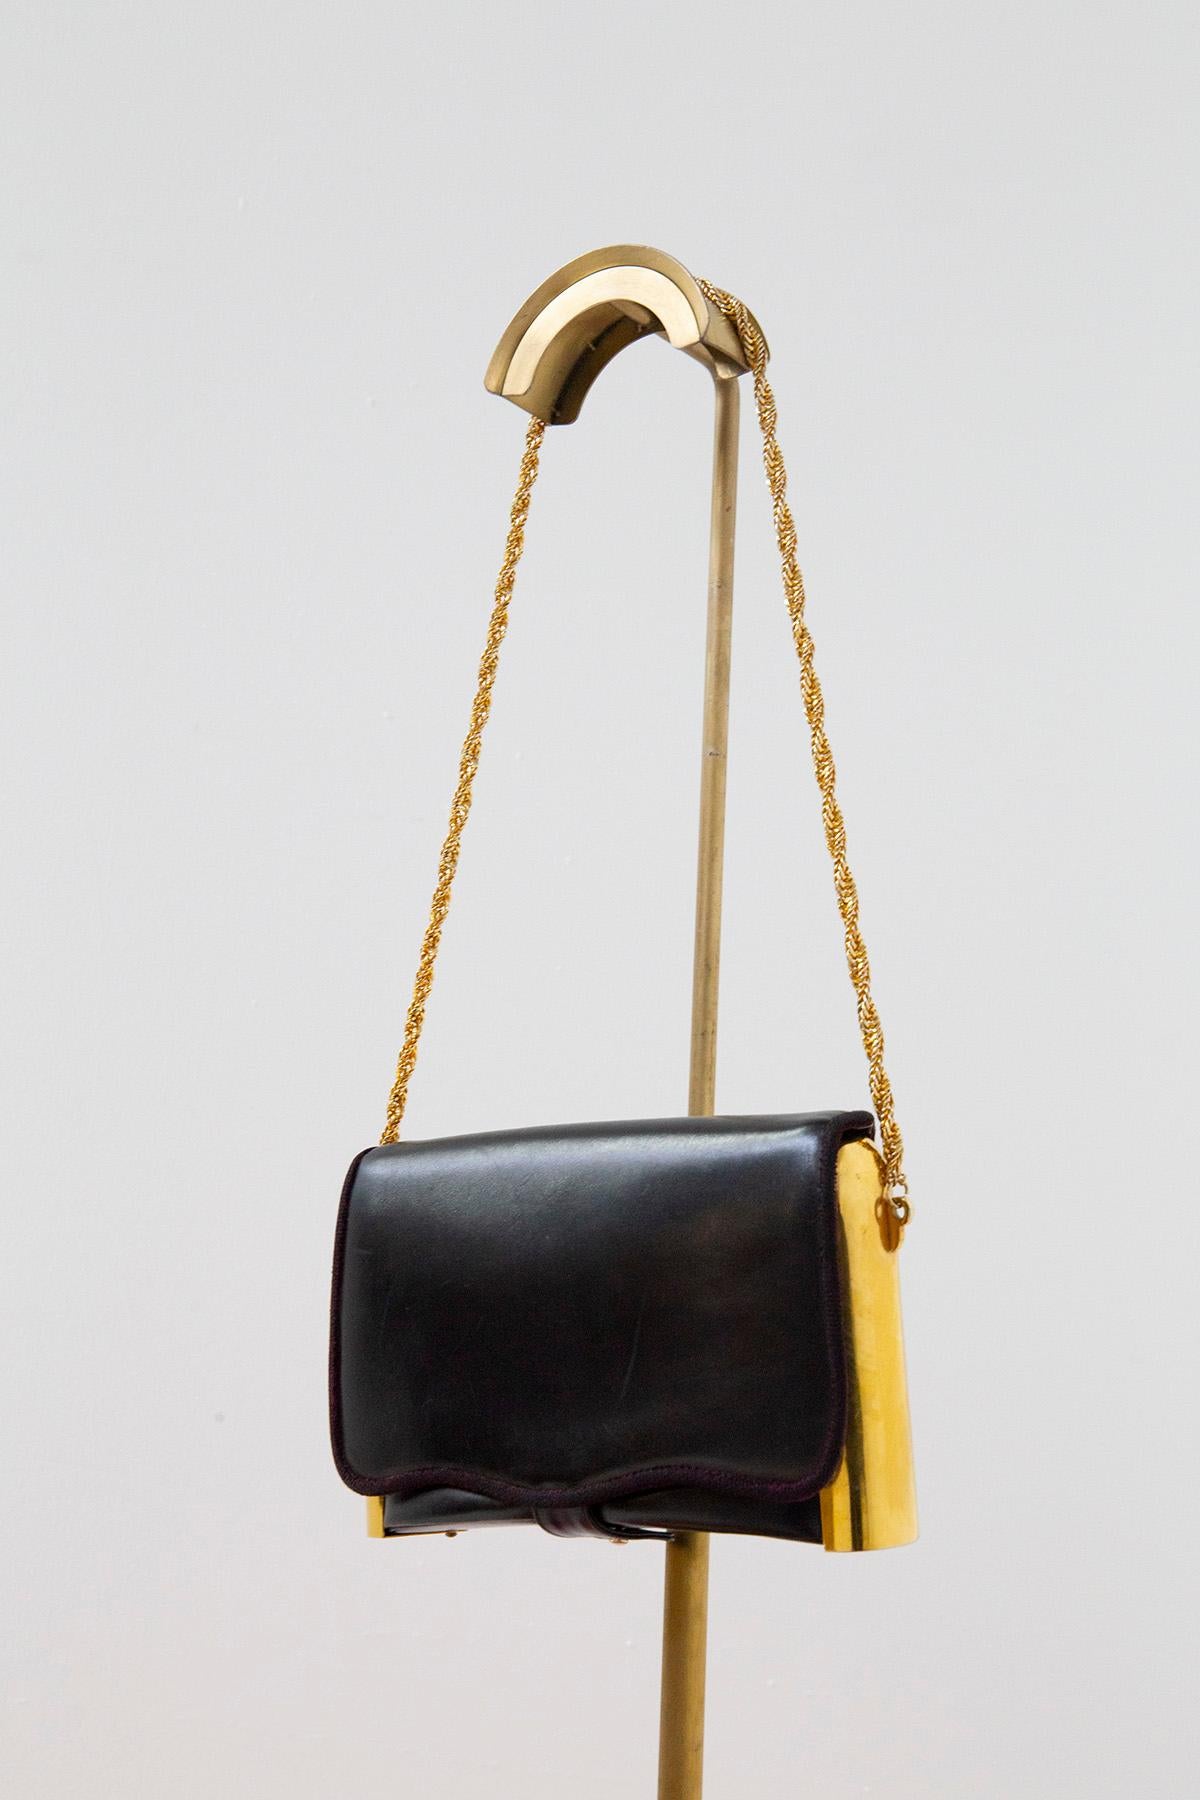 Roberta di Camerino Vintage gold metal shoulder bag In Good Condition For Sale In Milano, IT